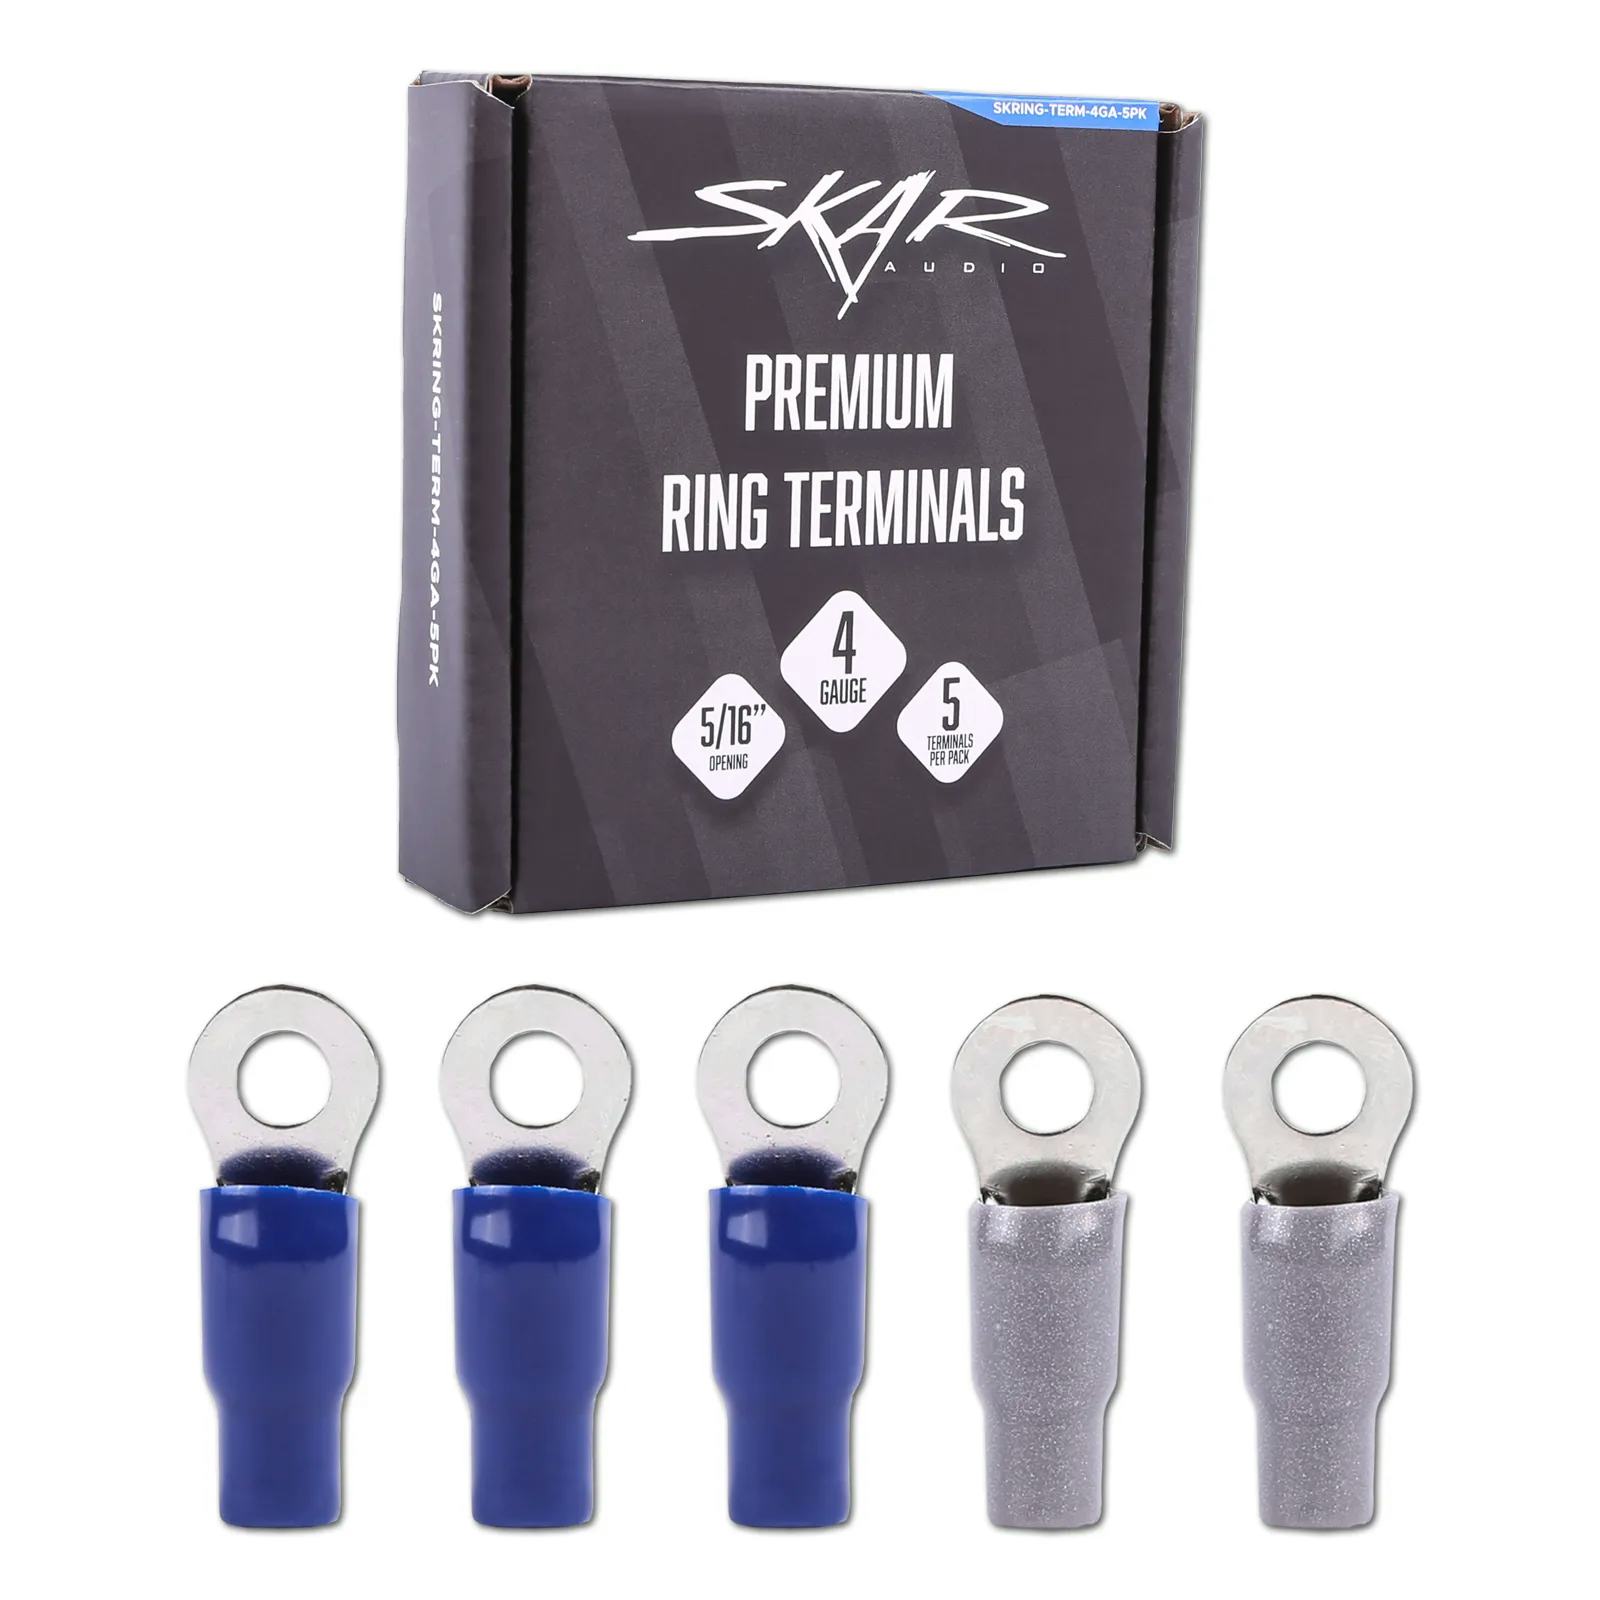 SKRING-TERM-4GA-5PK | 4 Gauge (5/16") Nickel Plated Premium Ring Terminals (5-Pack) #5